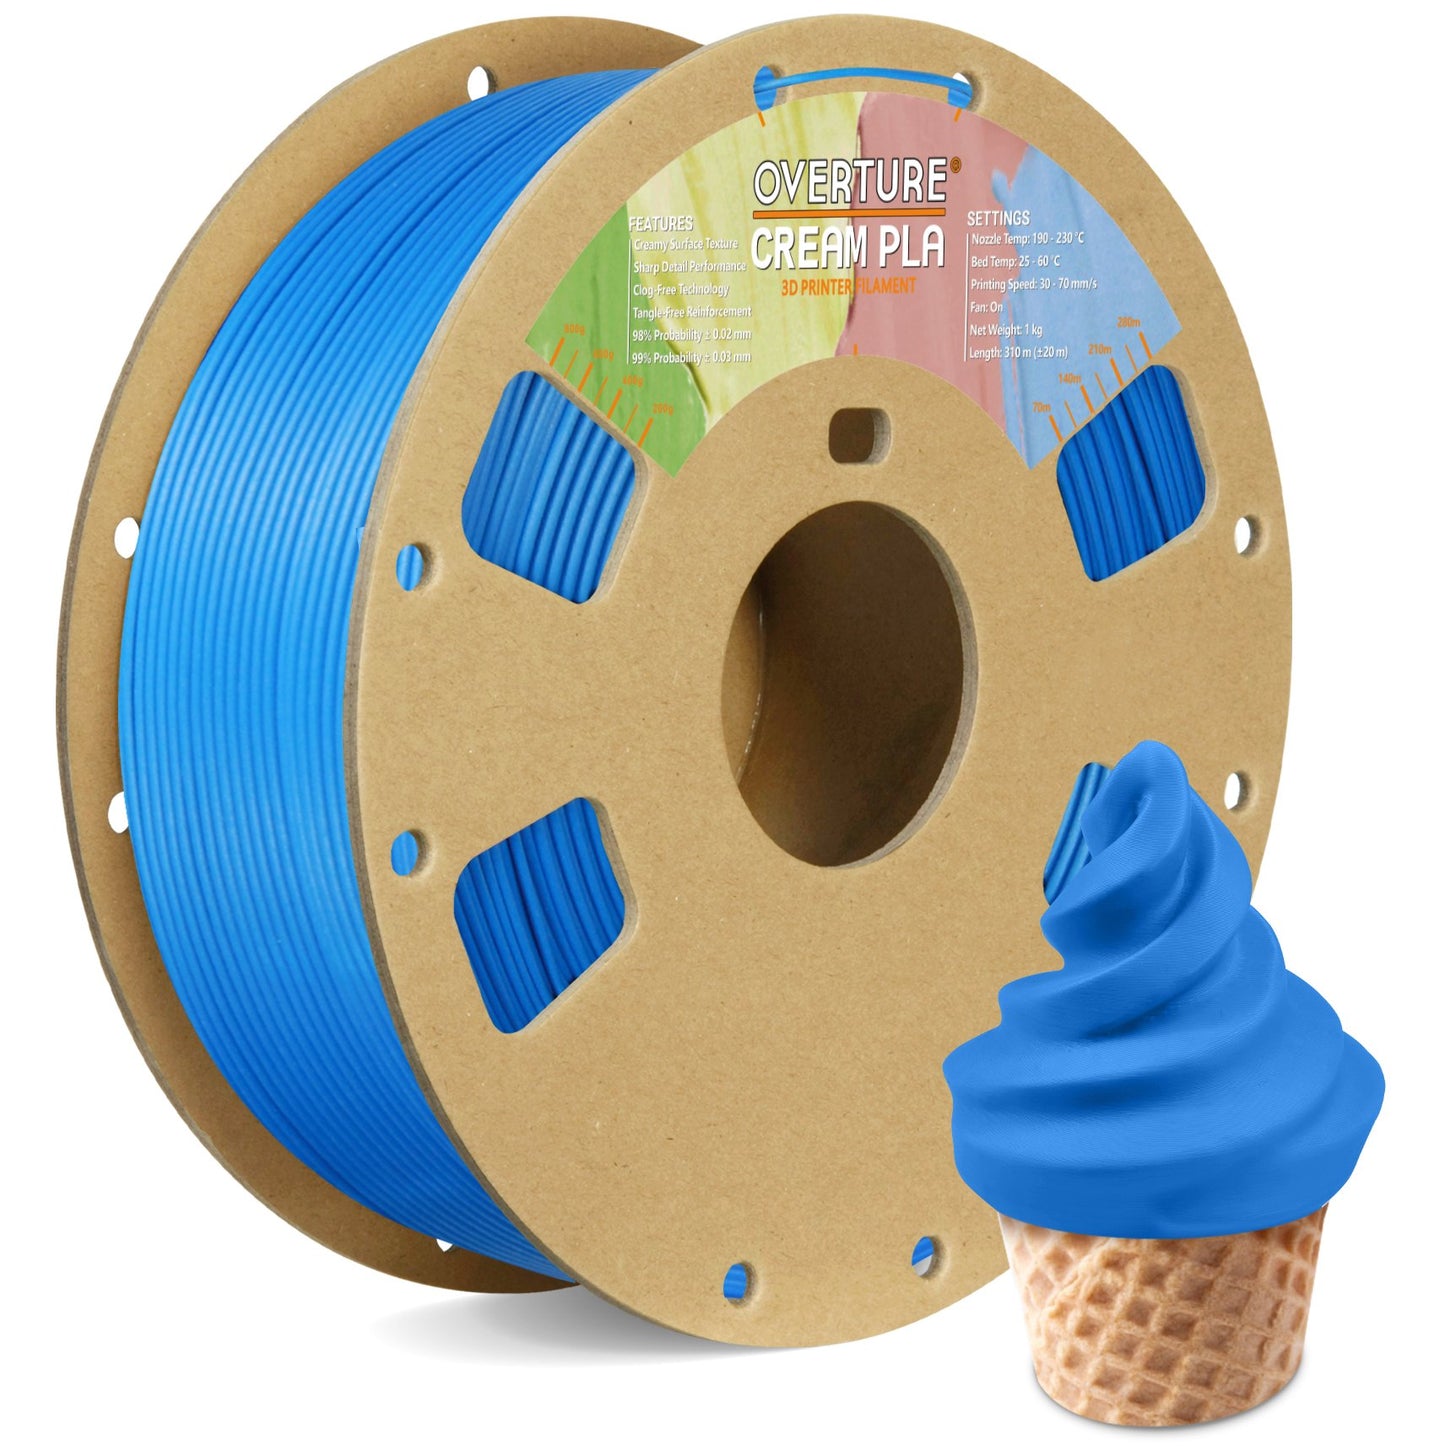 Overture Cream PLA 3D Printer Filament 1.75mm - Overture 3D